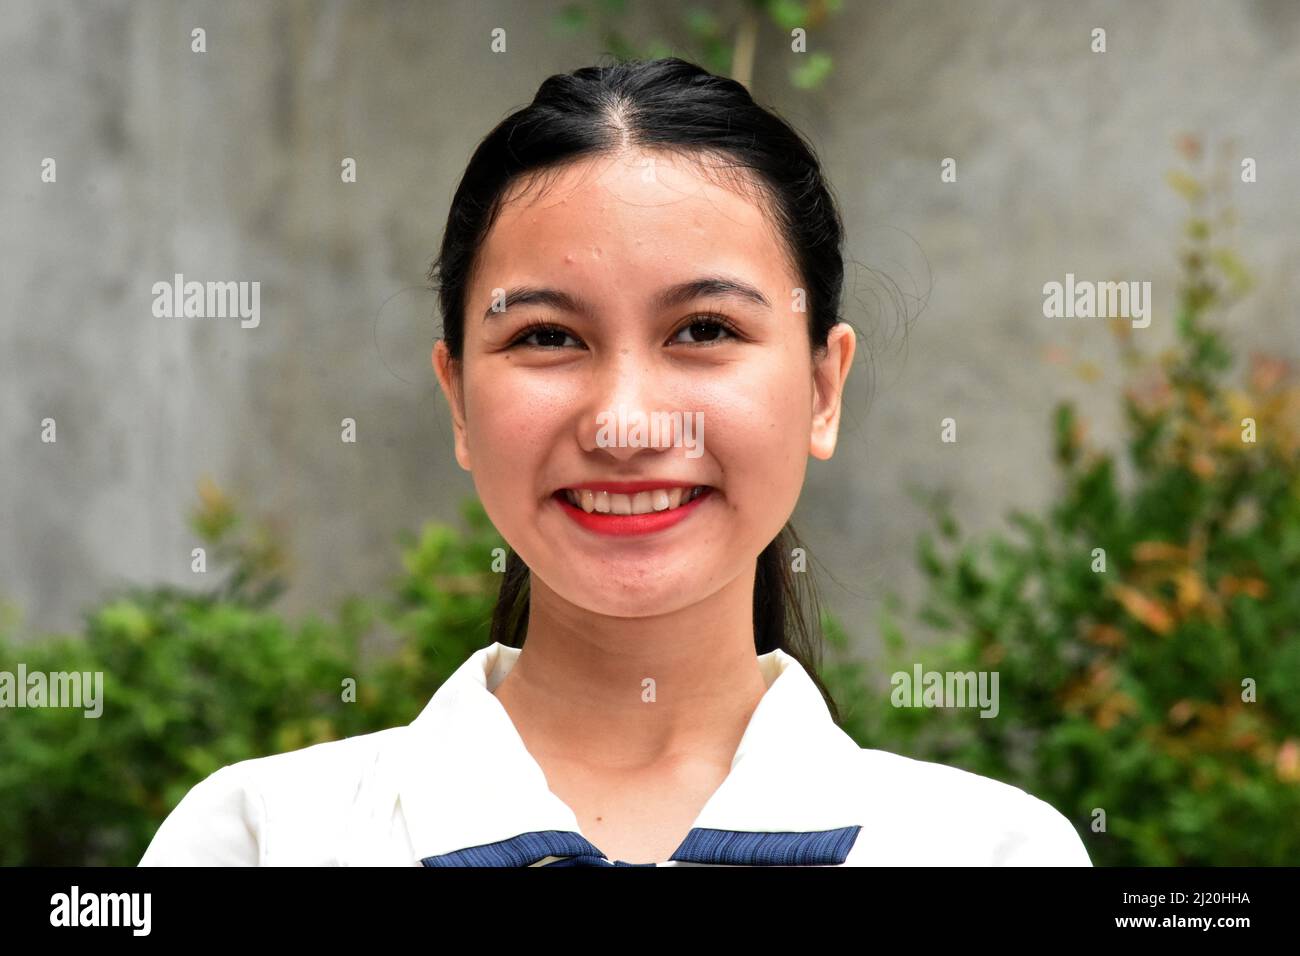 A Smiling Asian Woman Headshot Stock Photo